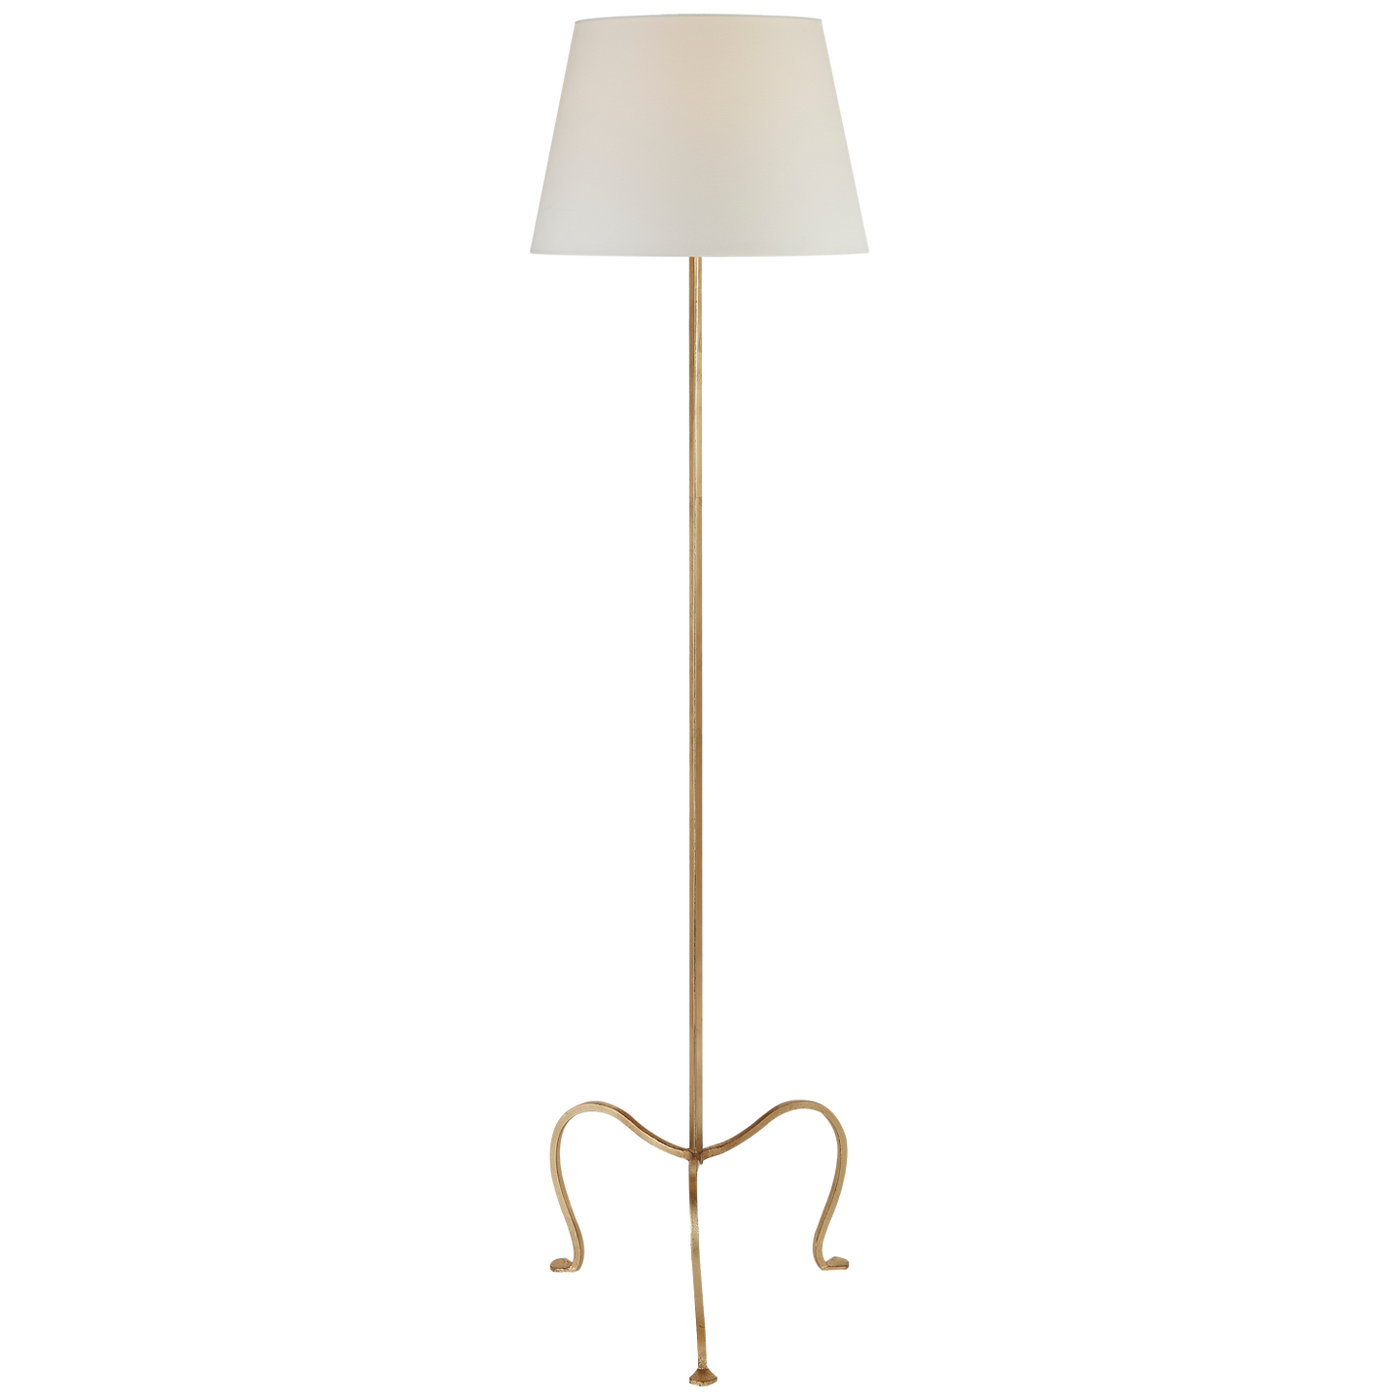 Albert Hand-Forged Floor Lamp  | Newport Lamp And Shade | Located in Newport, RI